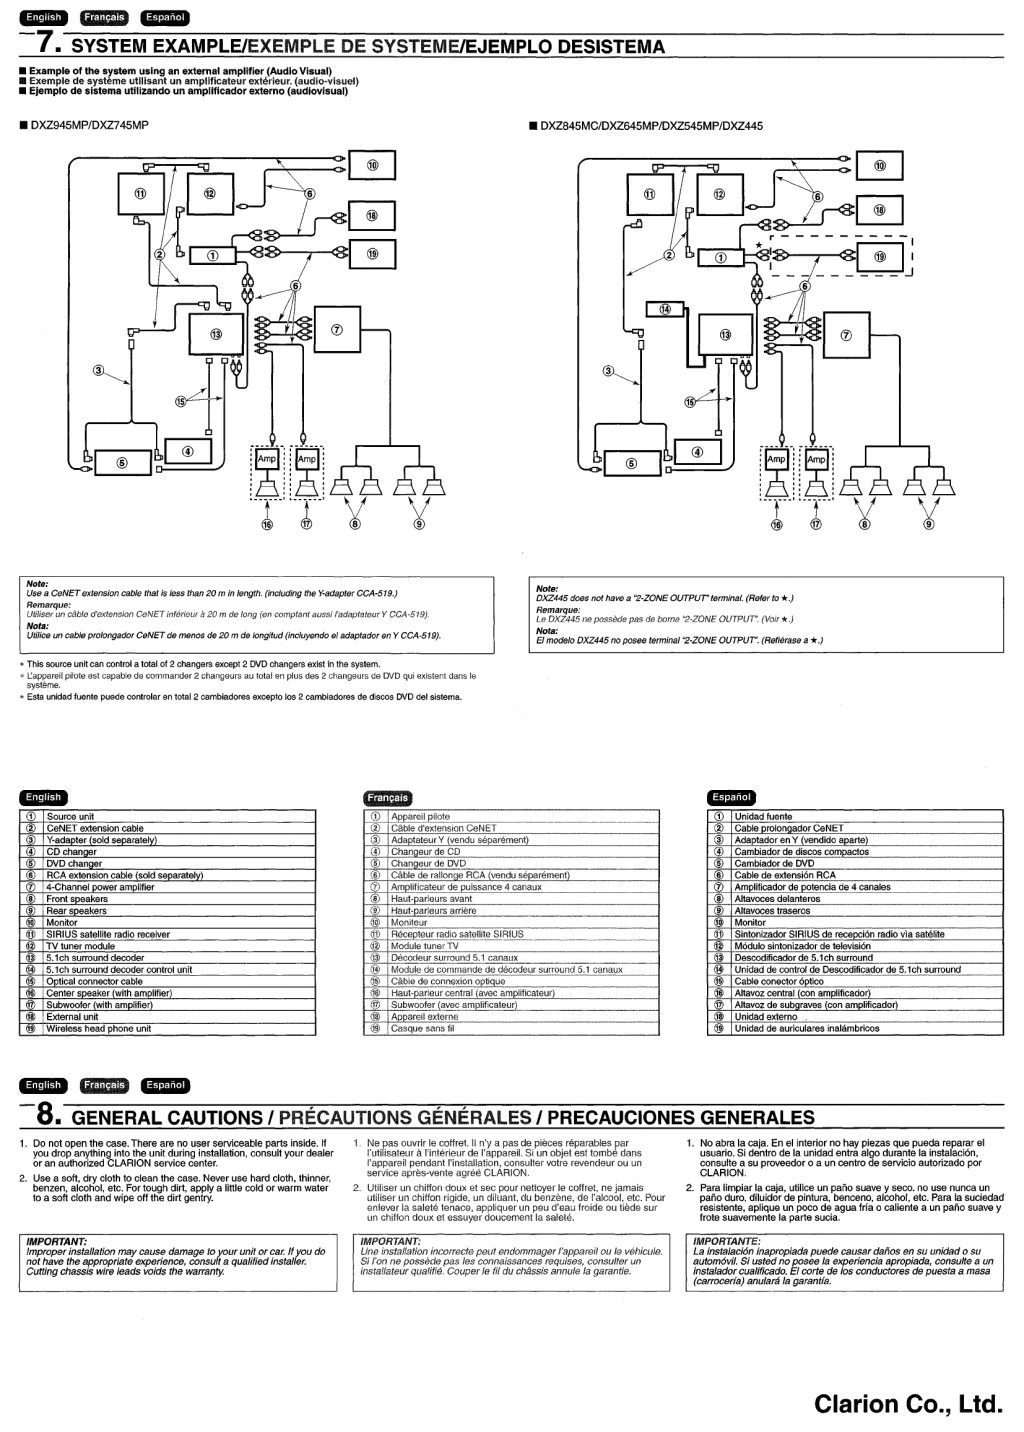 clarion car stereo wiring diagram radio code marine player audio in rh panoramabypatysesma com clarion marine